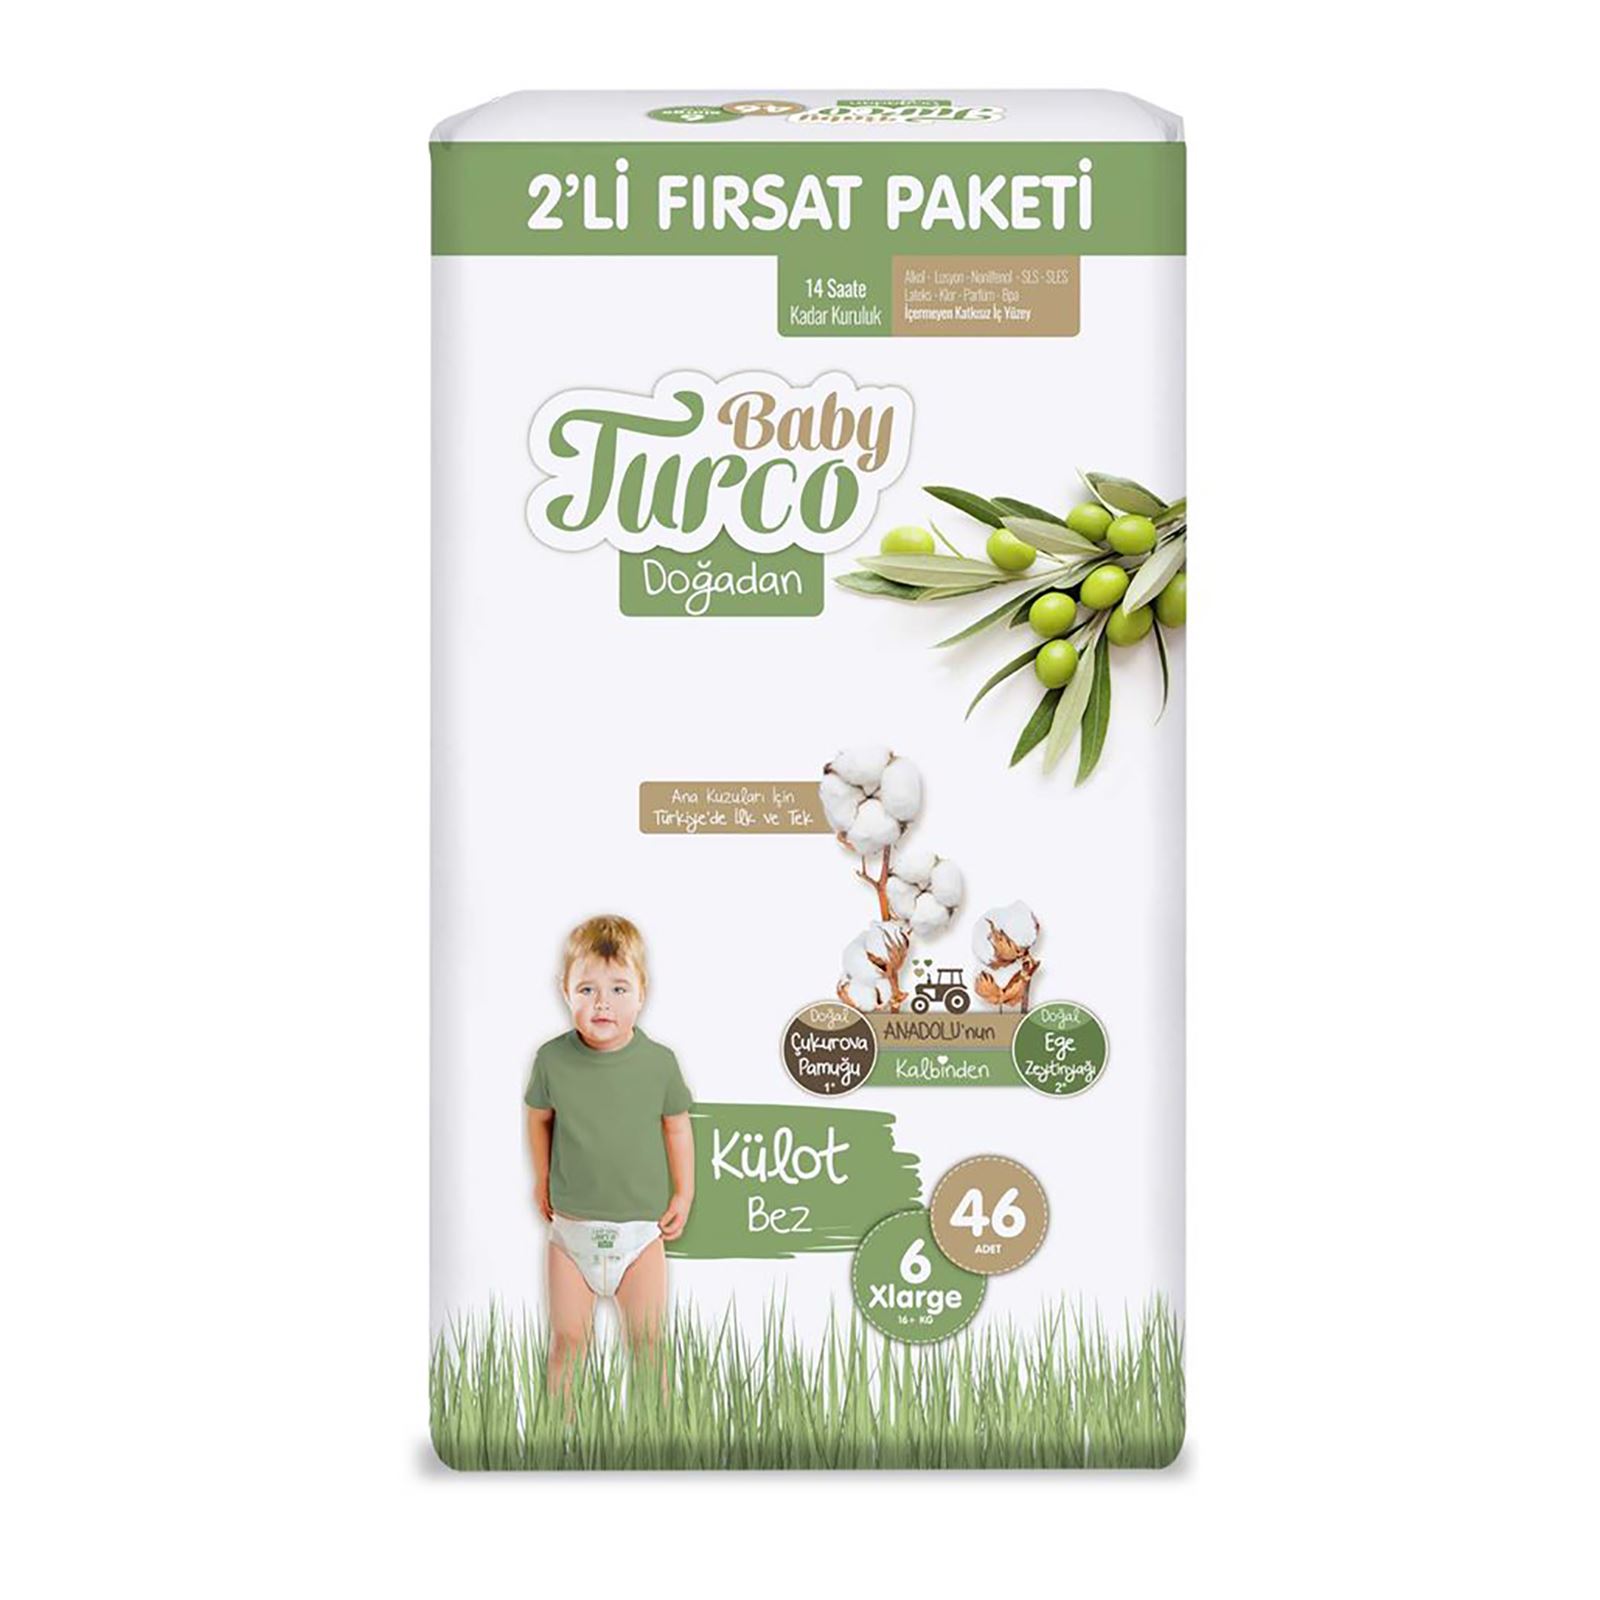 Baby Turco Doğadan Fırsat Paketi Külot Bez 6 Xlarge Numara 46 Adet Beyaz